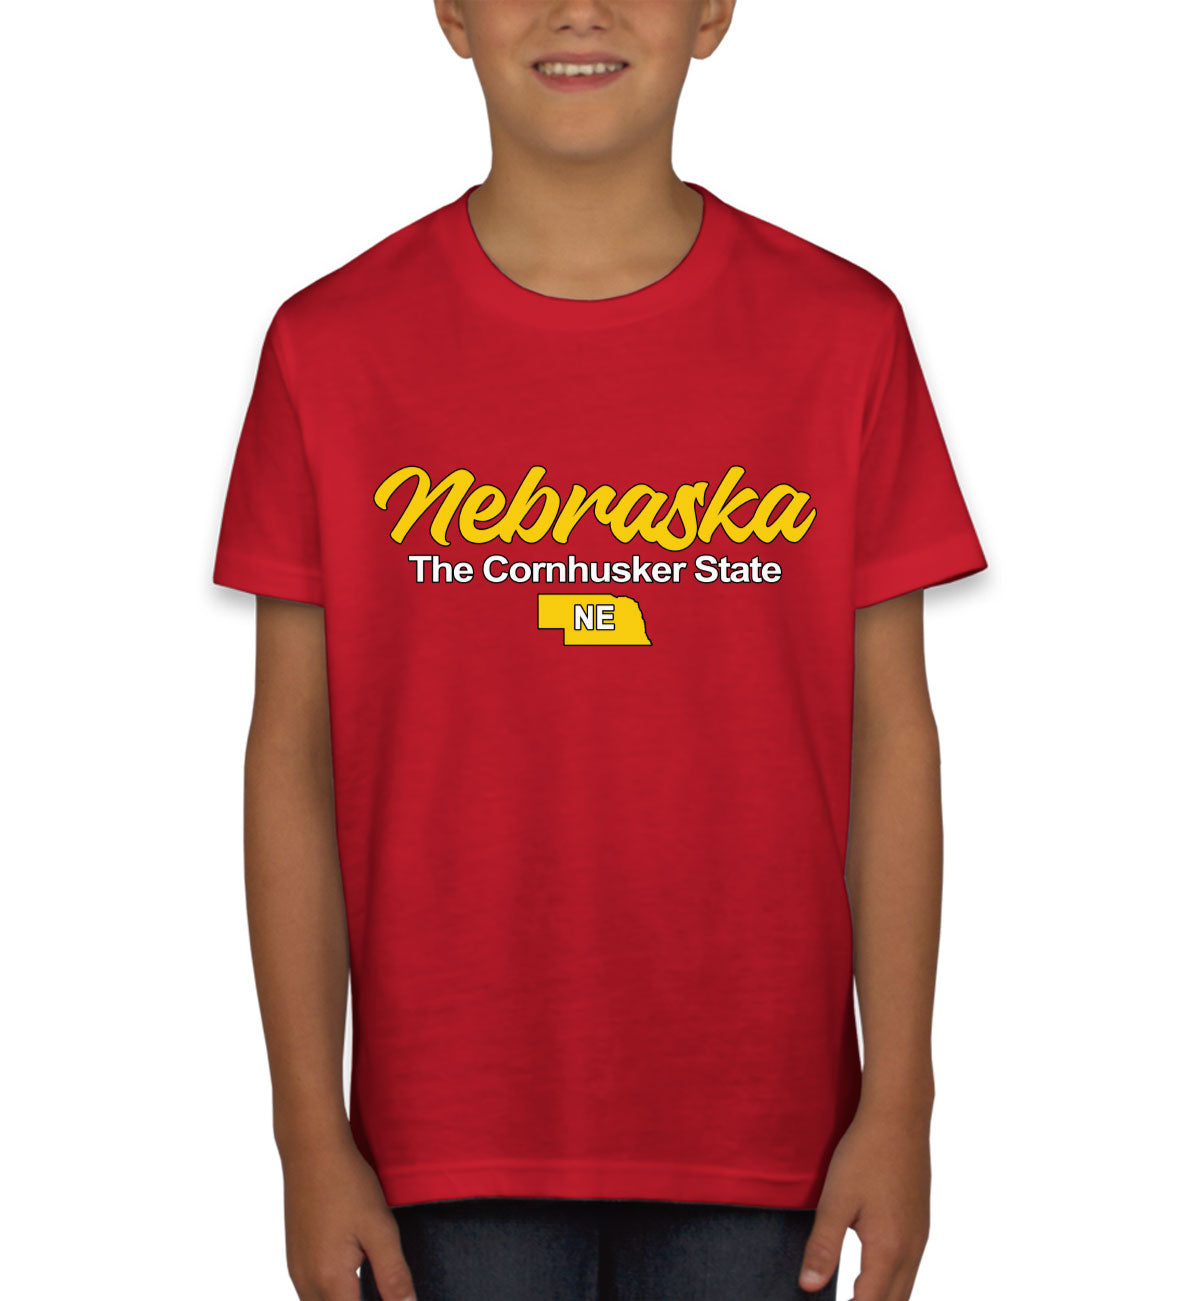 Nebraska The Cornhusker State Youth T-shirt